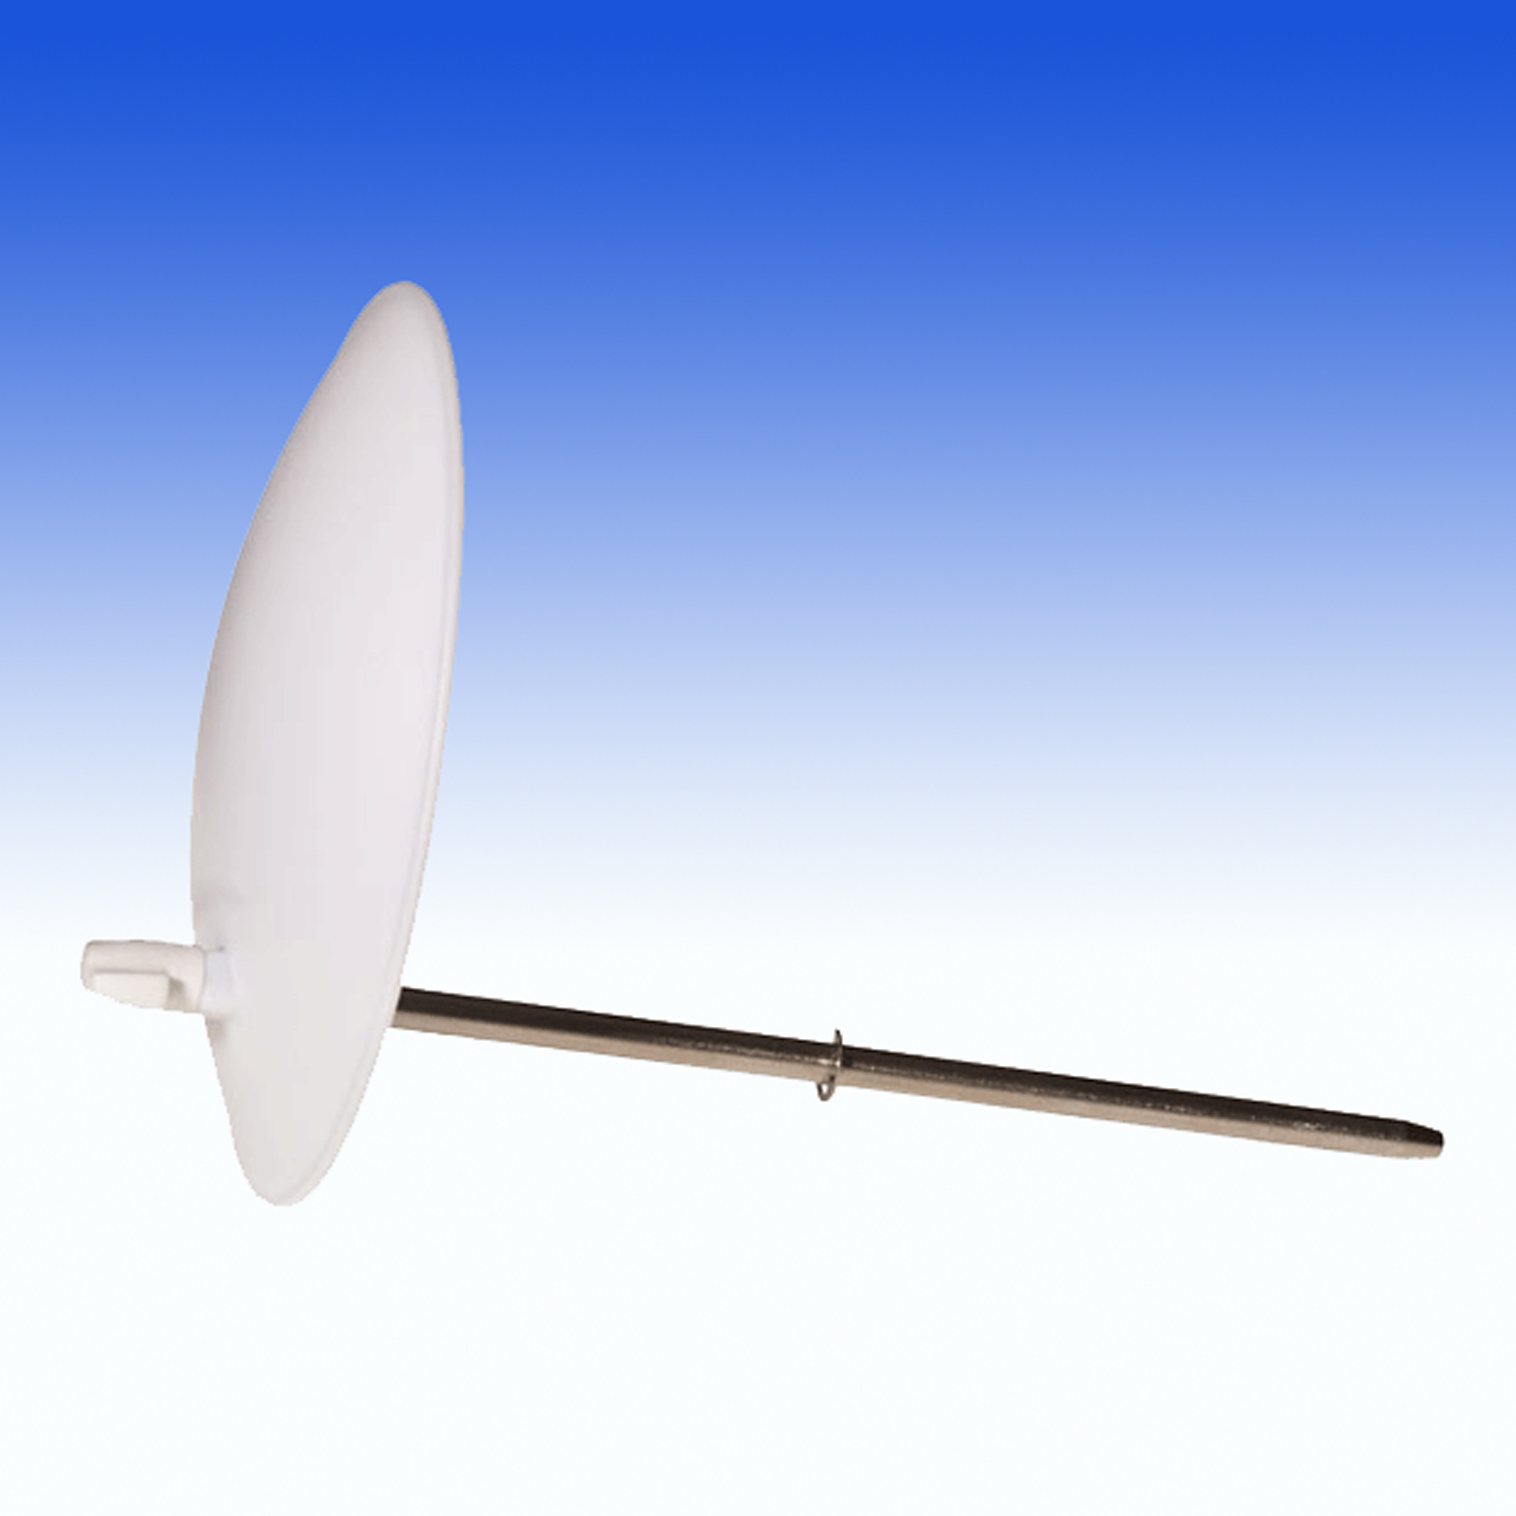 Deflektor translucent weiss 14 cm (E26305) - Solange Vorrat